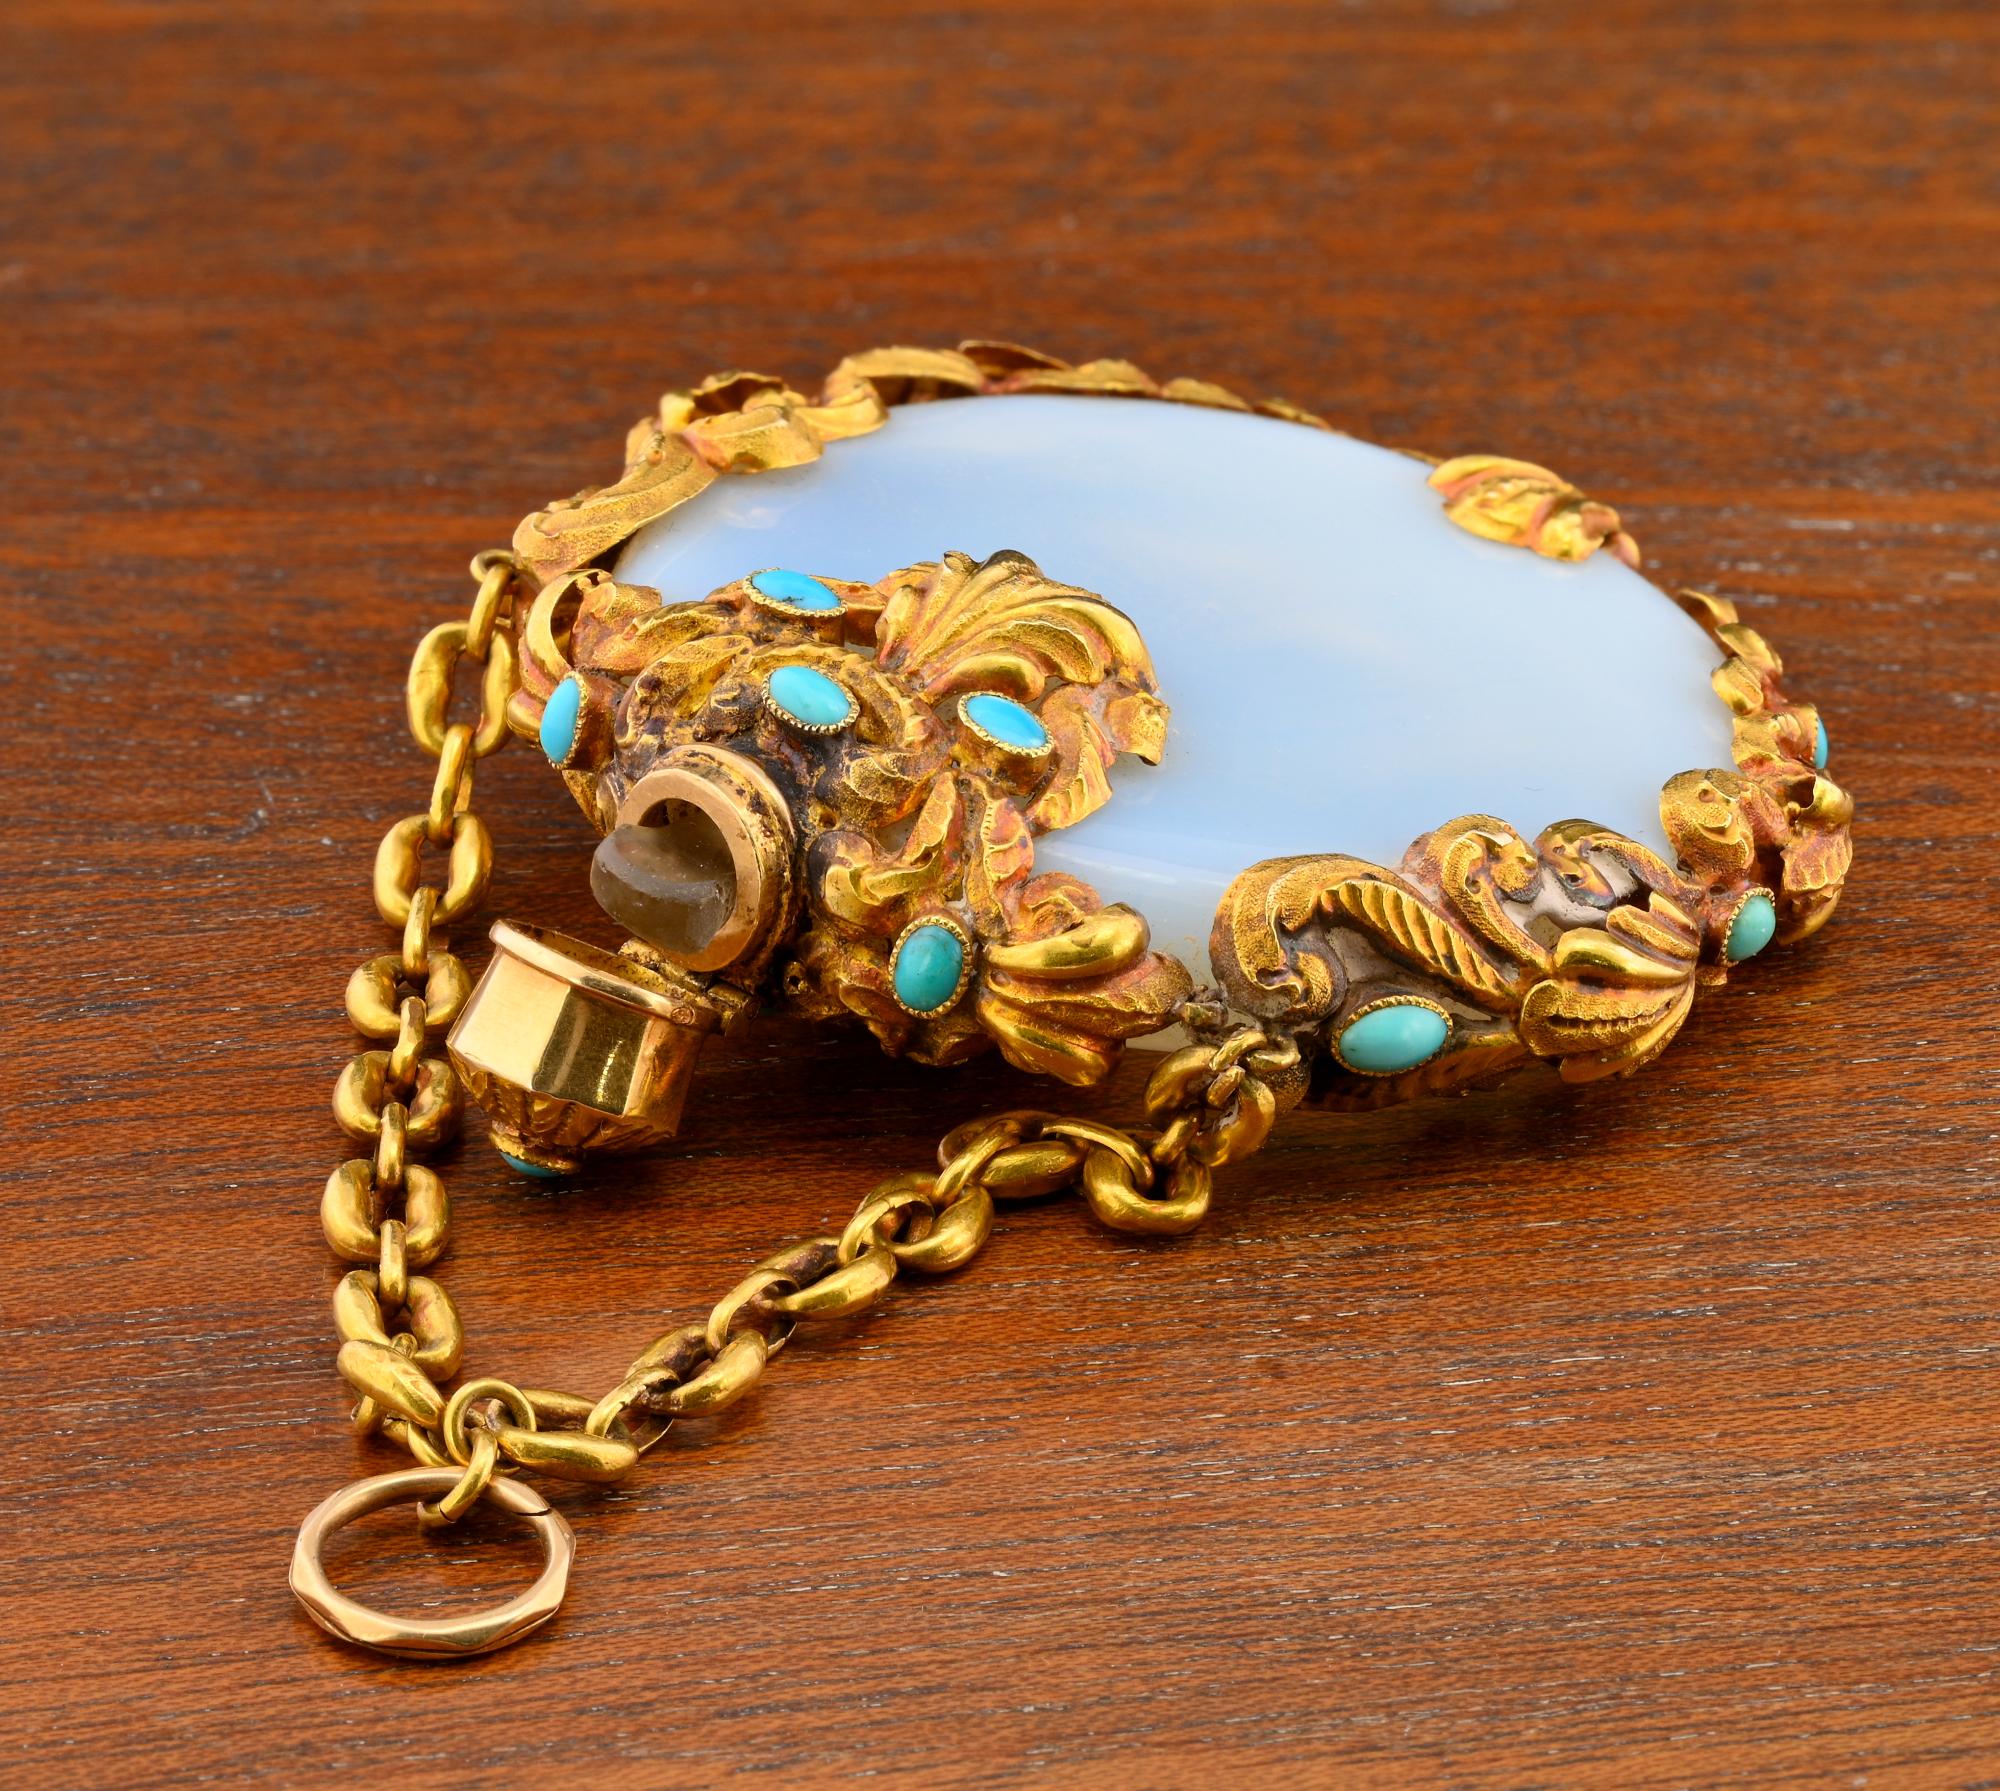 Regency Scent Bottle Azure Opaline Turquoise 15 Ct Gold Pendant For Sale 3